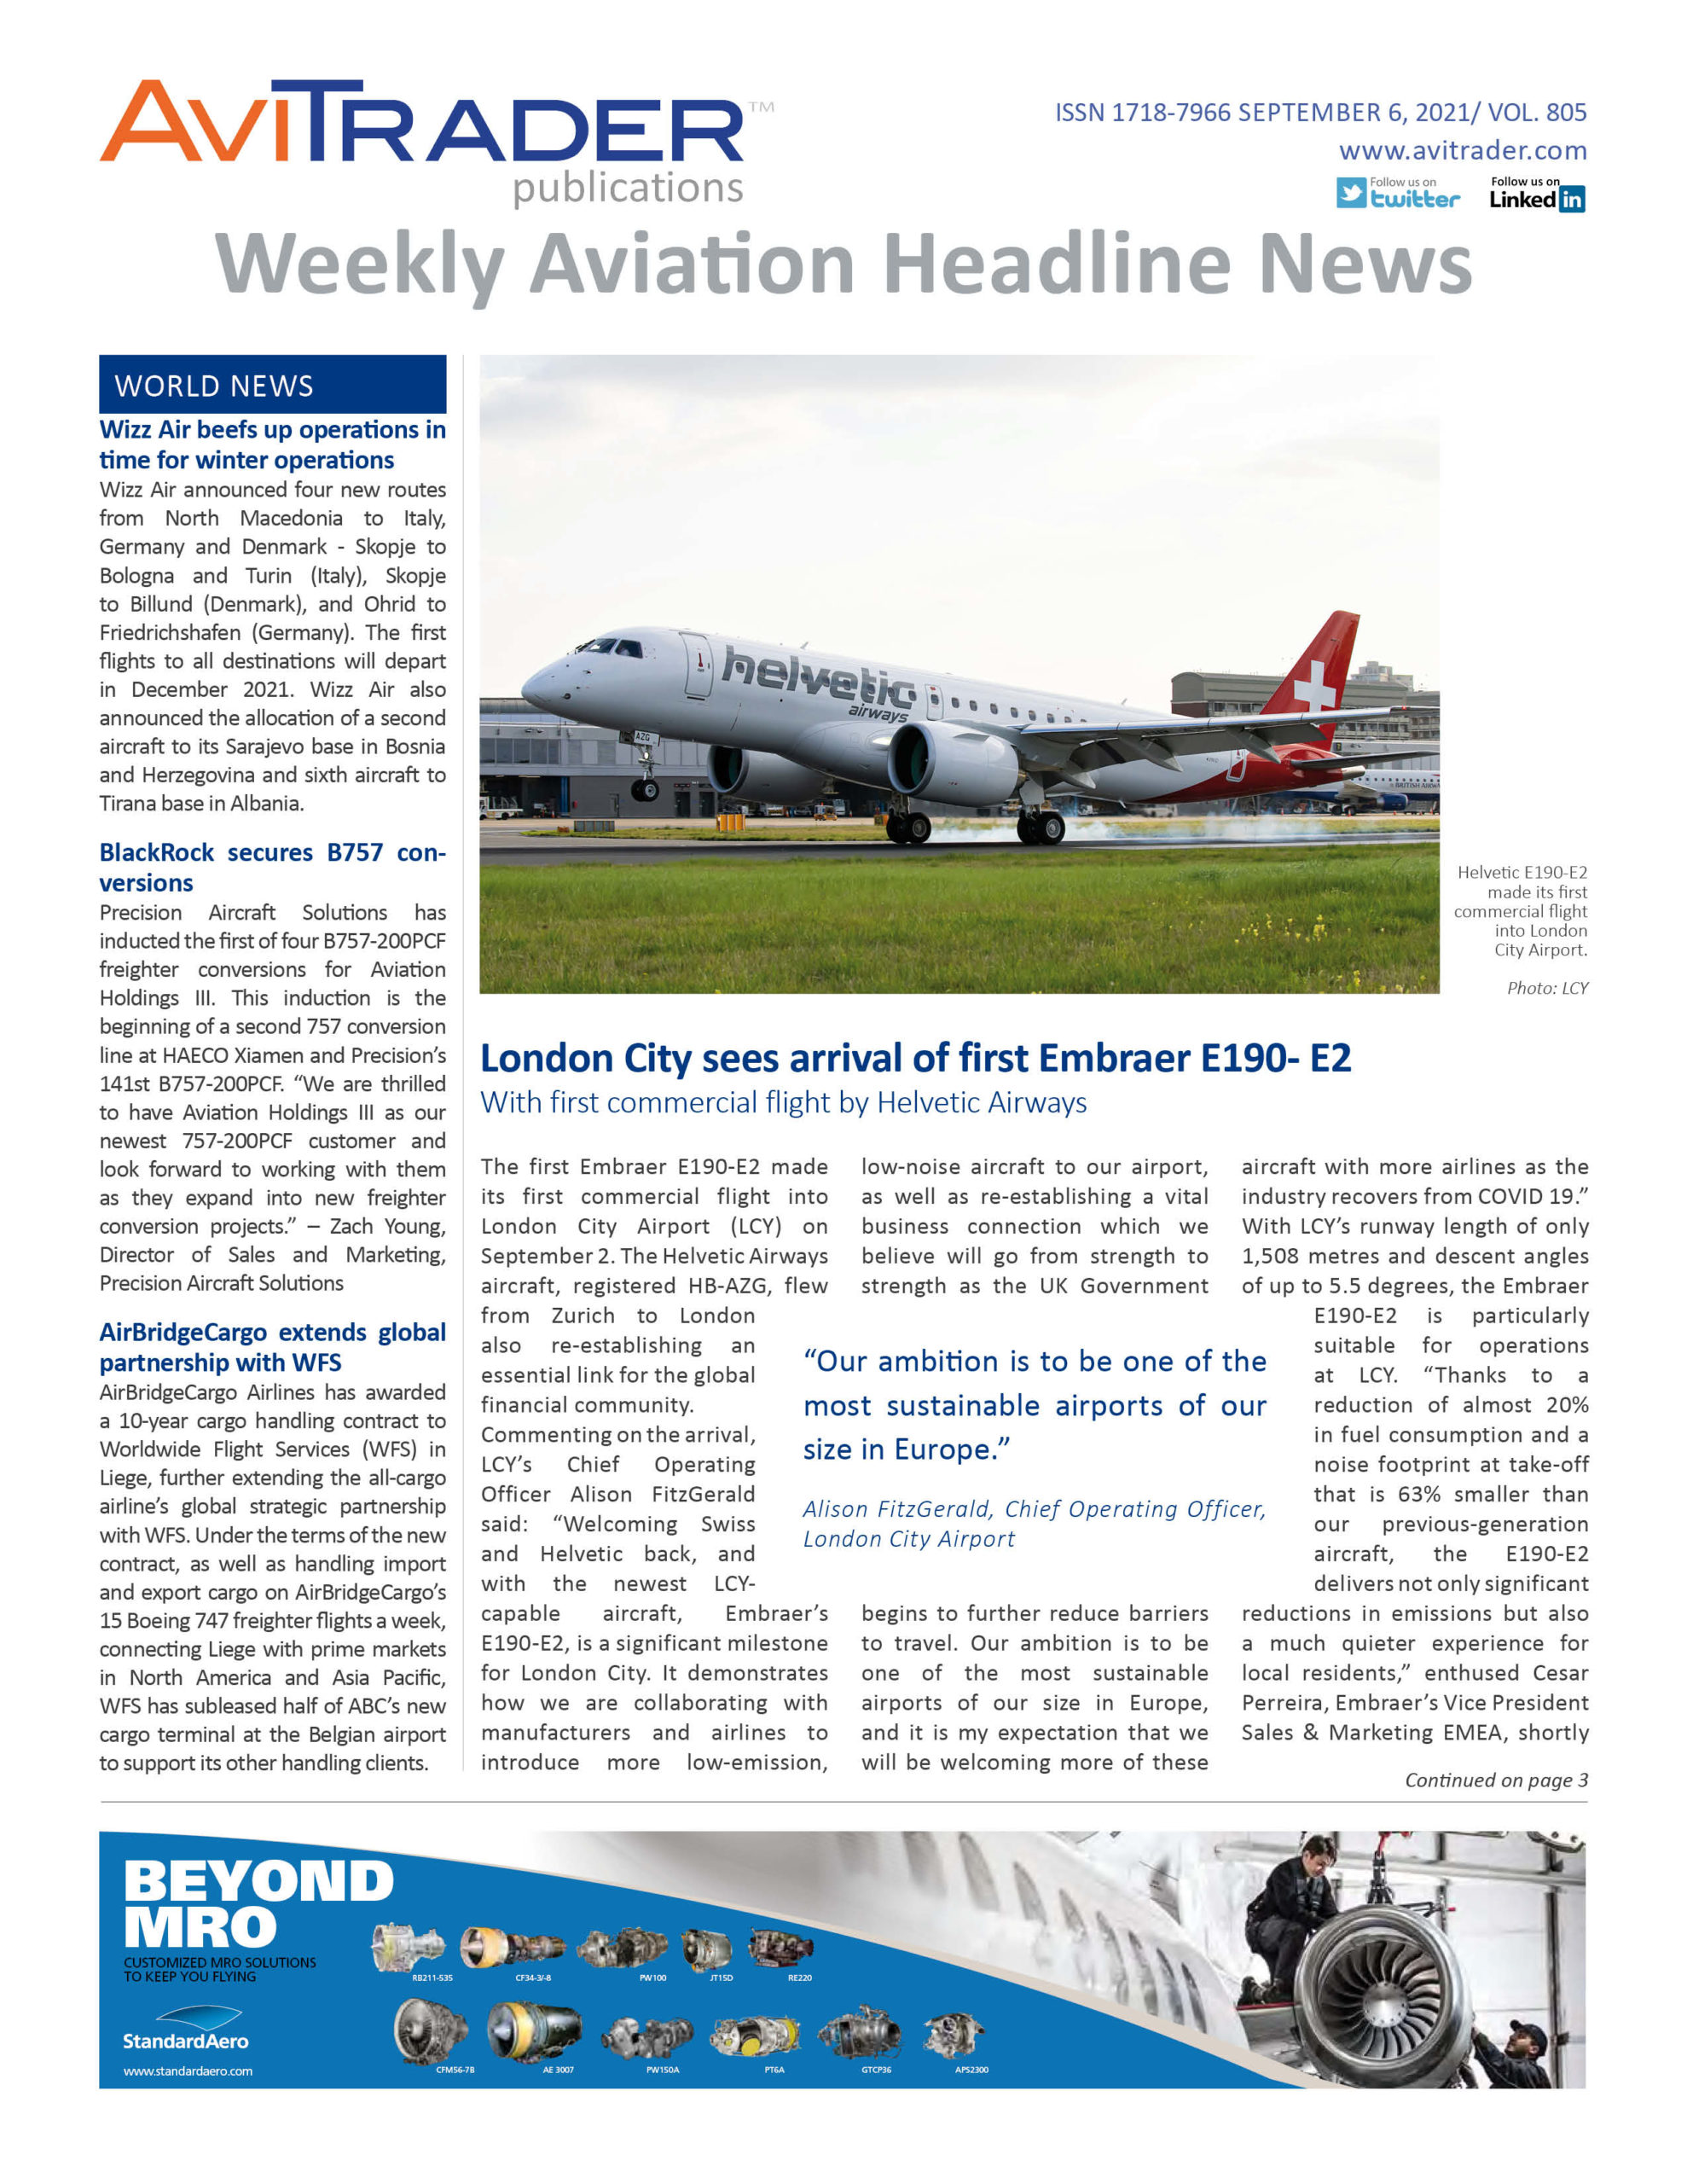 AviTrader_Weekly_Headline_News_Cover_2021-08-30